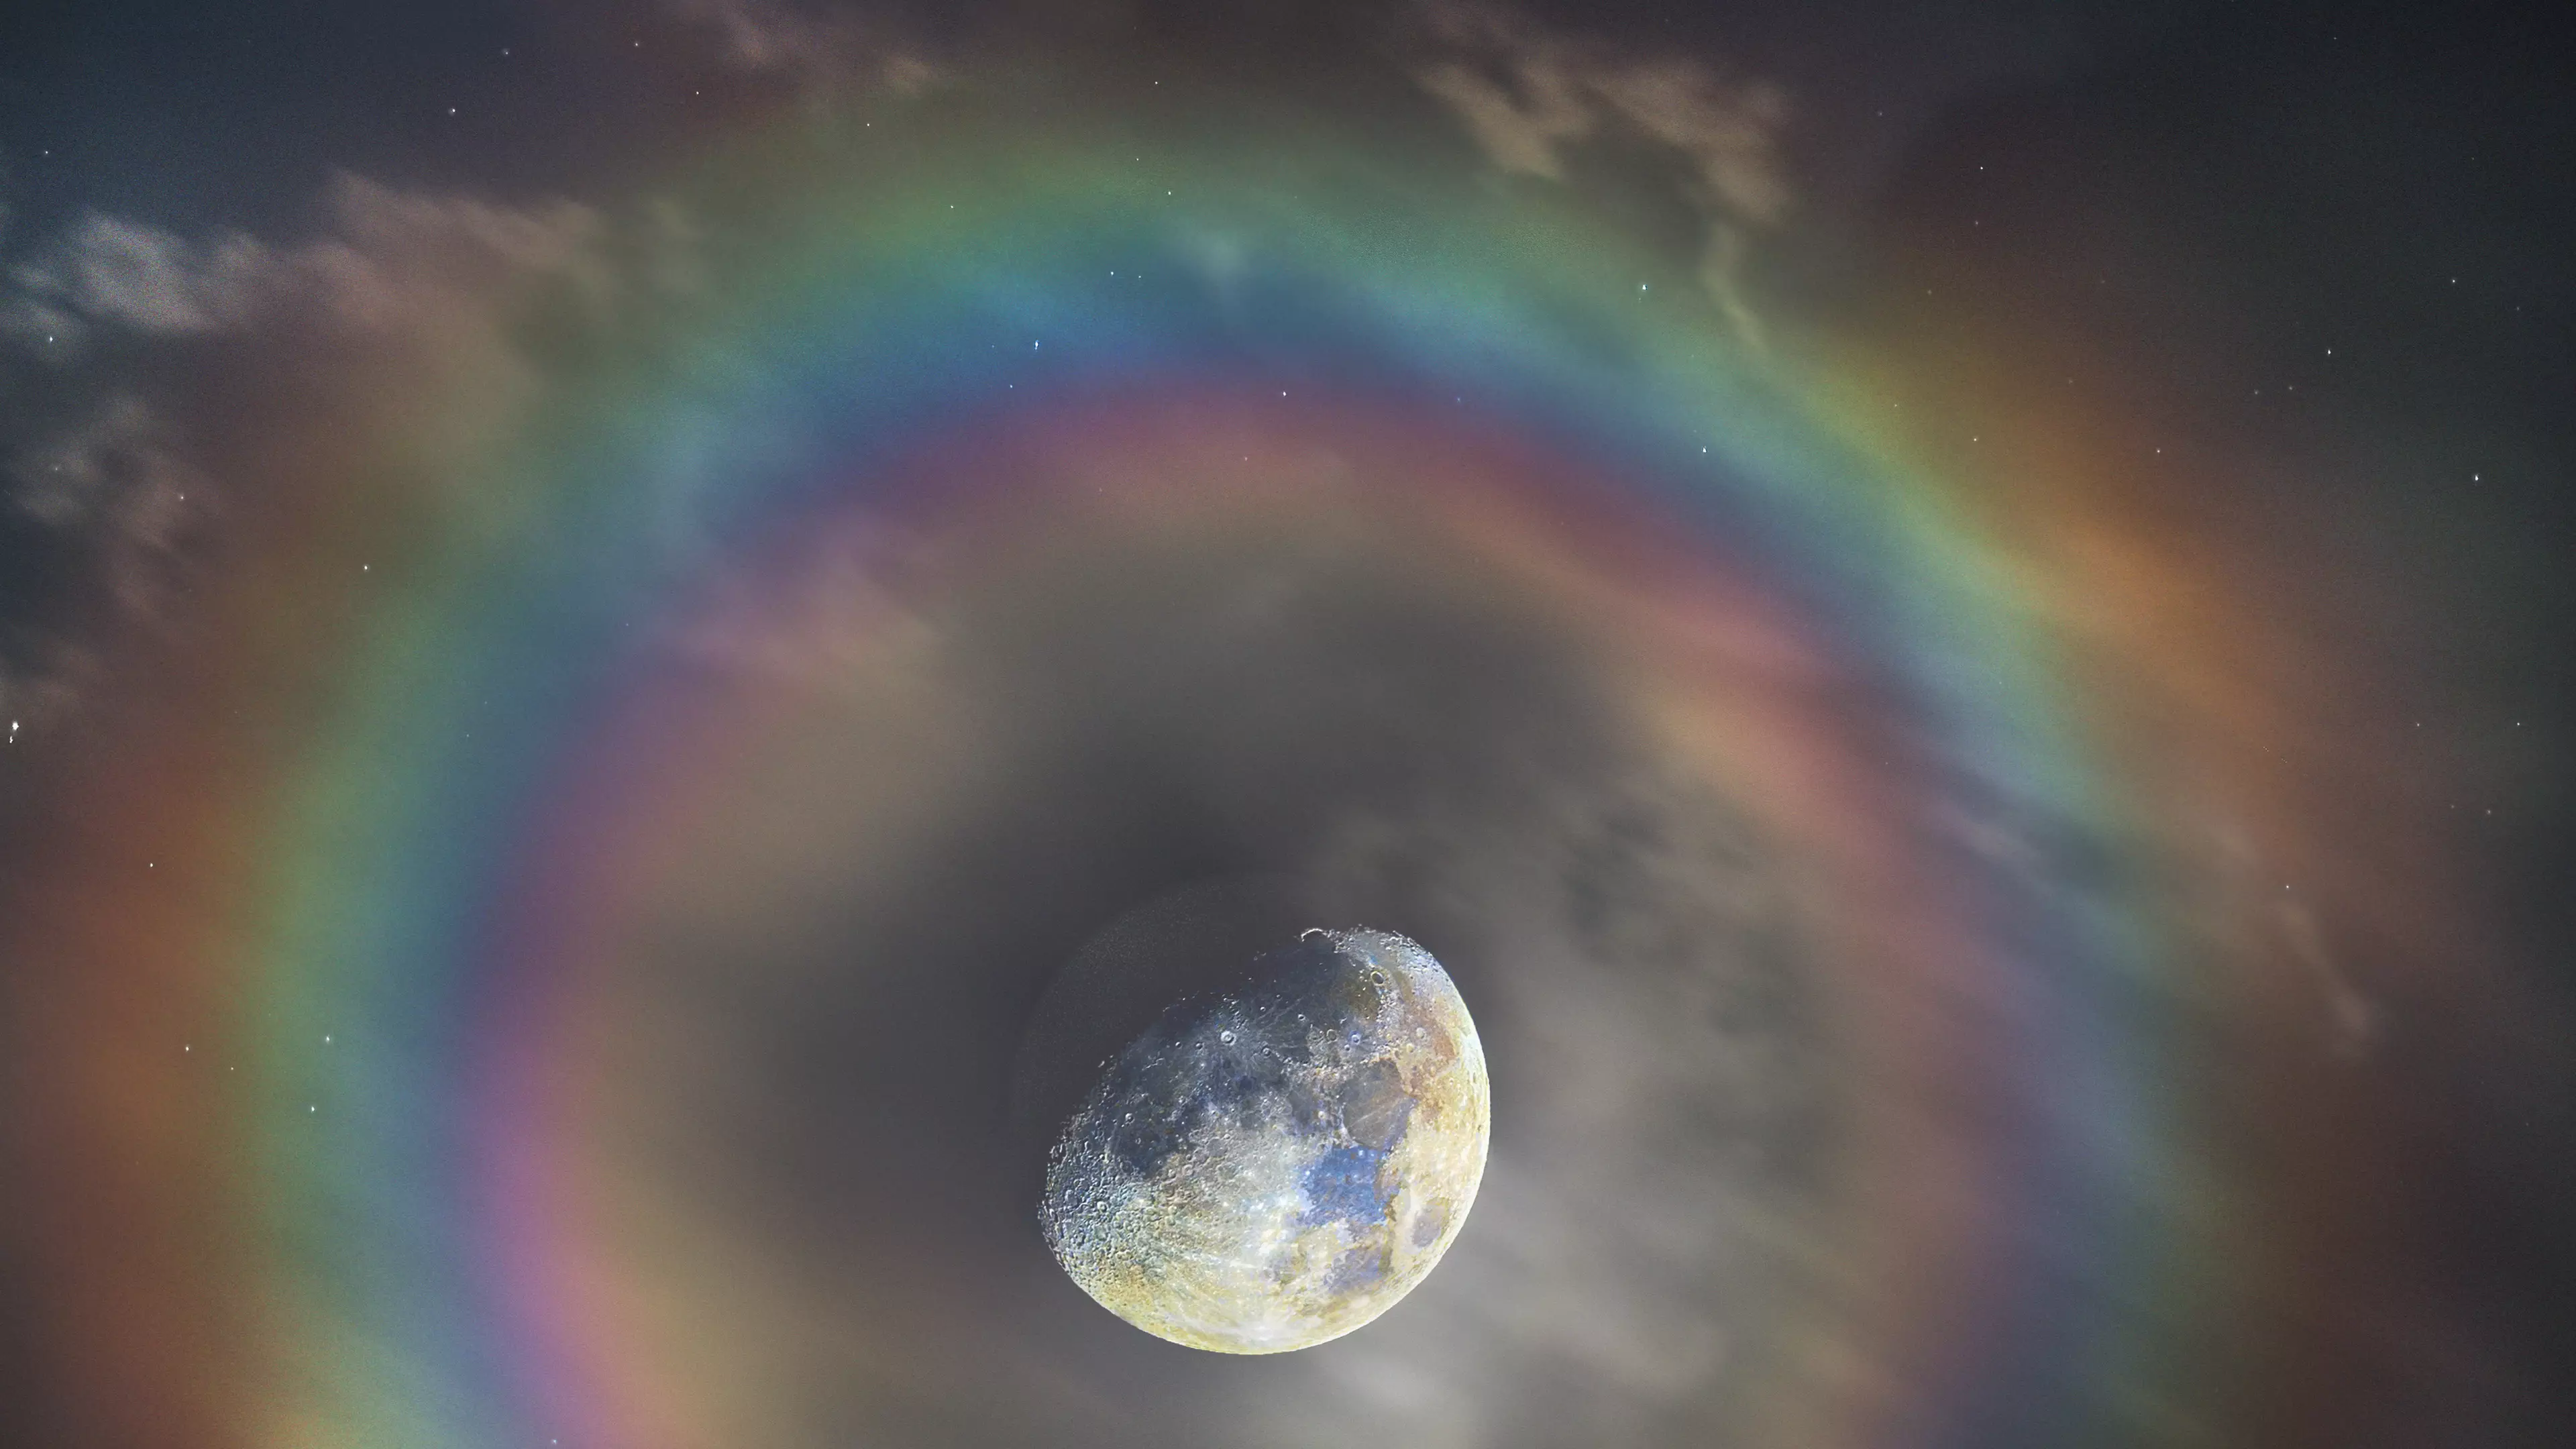 Stunning Photo Shows Moon With Celestial Rainbow